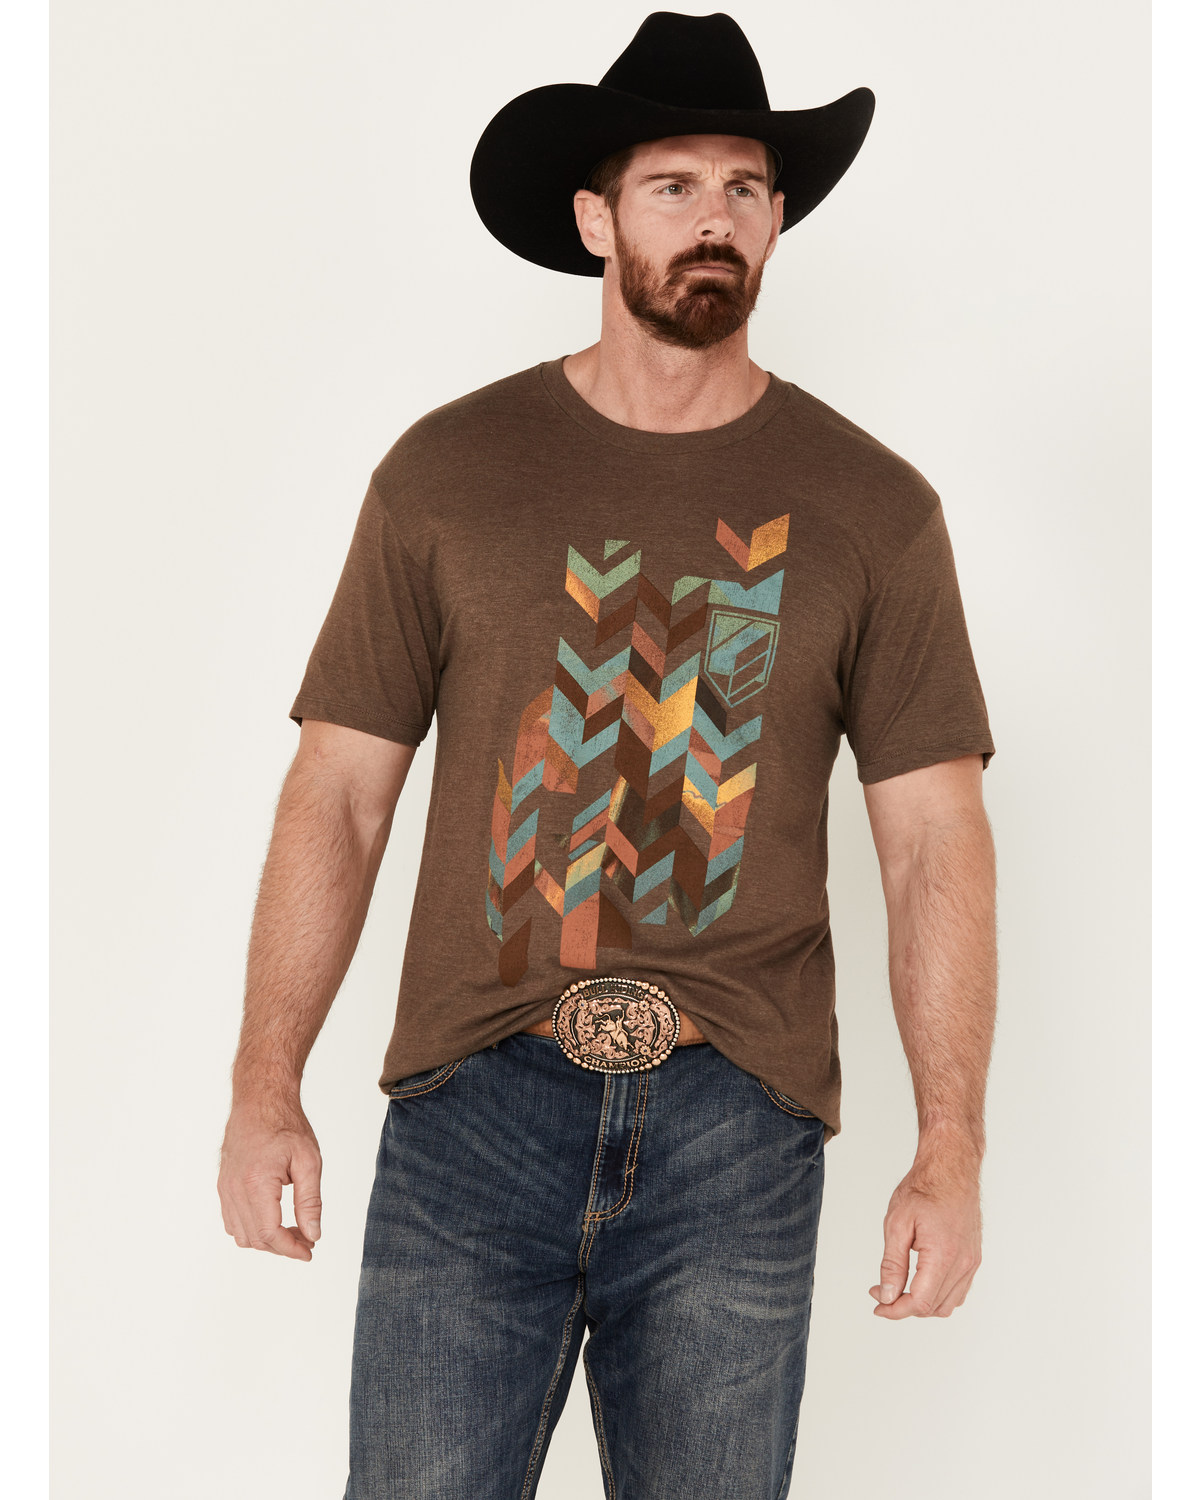 RANK 45® Men's Chevron Short Sleeve Graphic T-Shirt